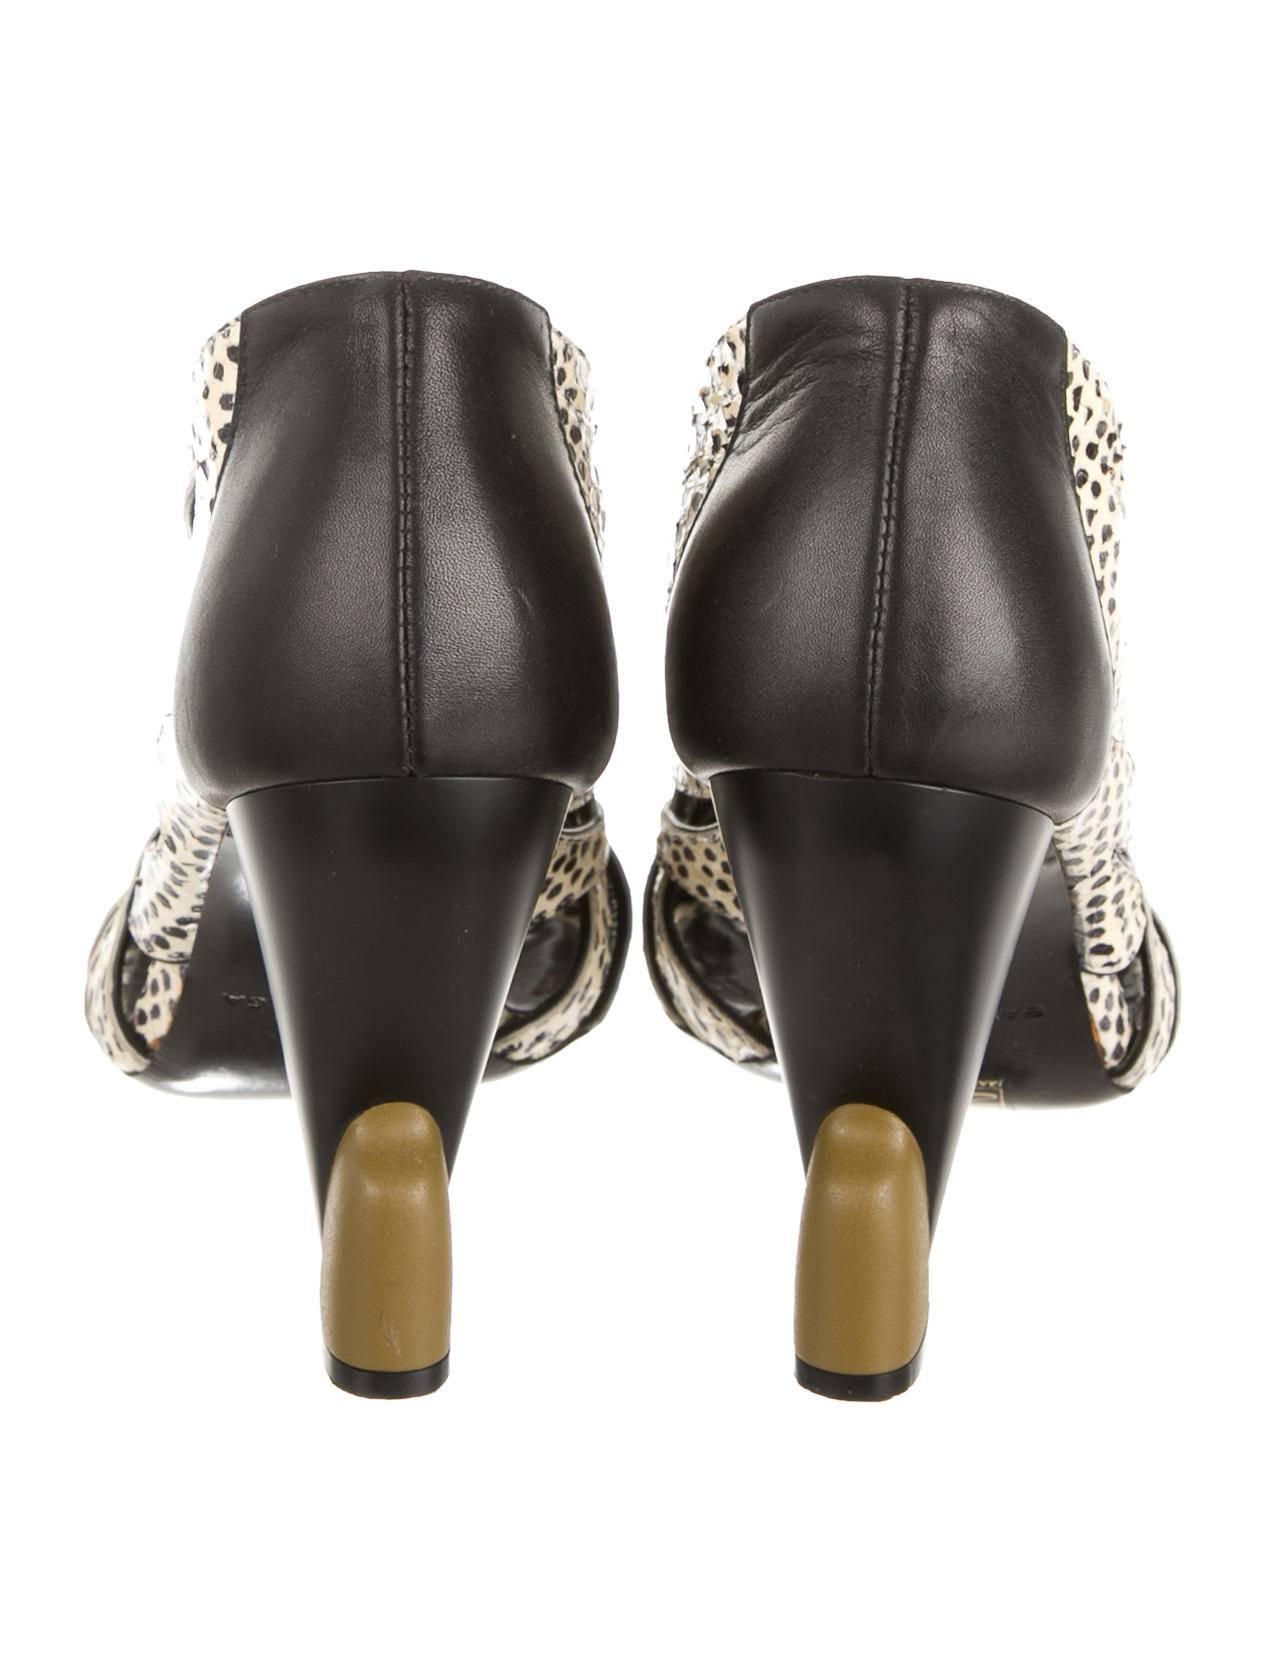 Women's Balenciaga NEW & SOLD OUT Futuristic White Black Snakeskin Resin Heels in Box